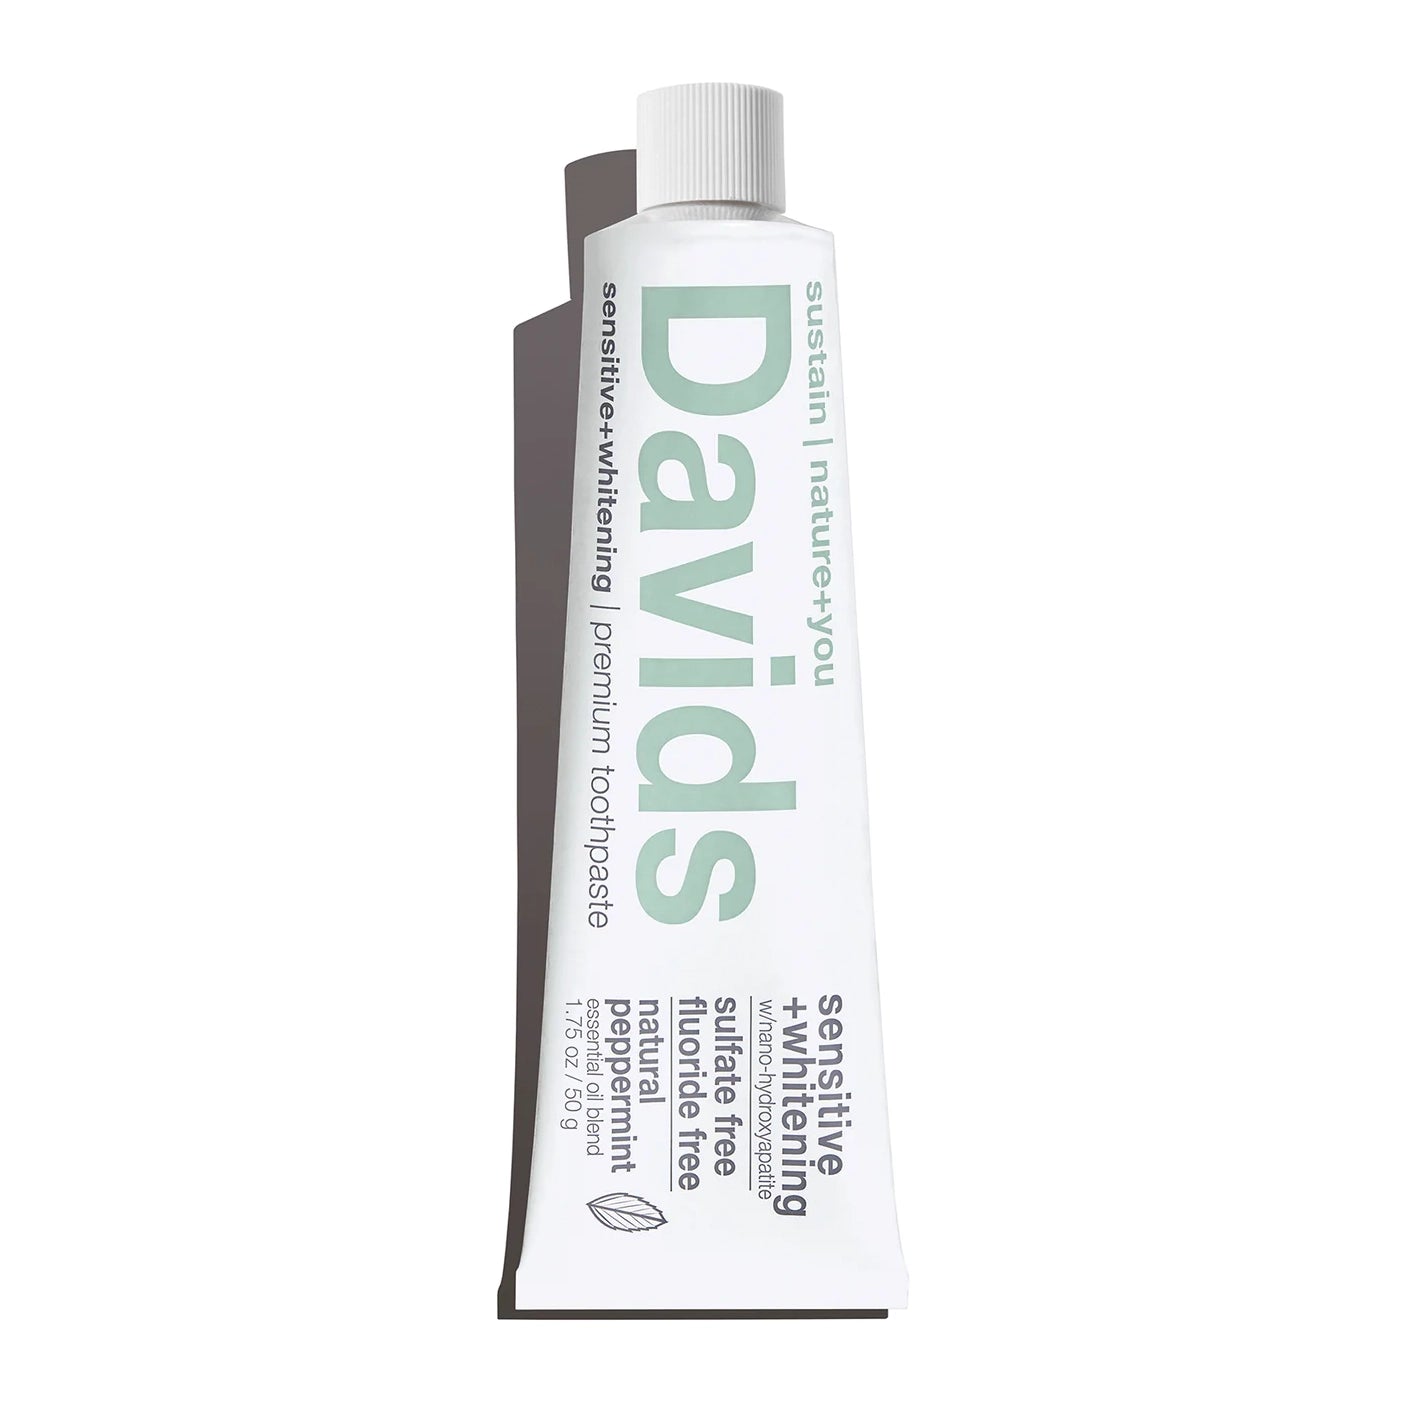 Davids Premium Toothpaste | Sensitive + Whitening Nano-Hydroxyapatite | Travel Size Davids Natural Toothpaste 